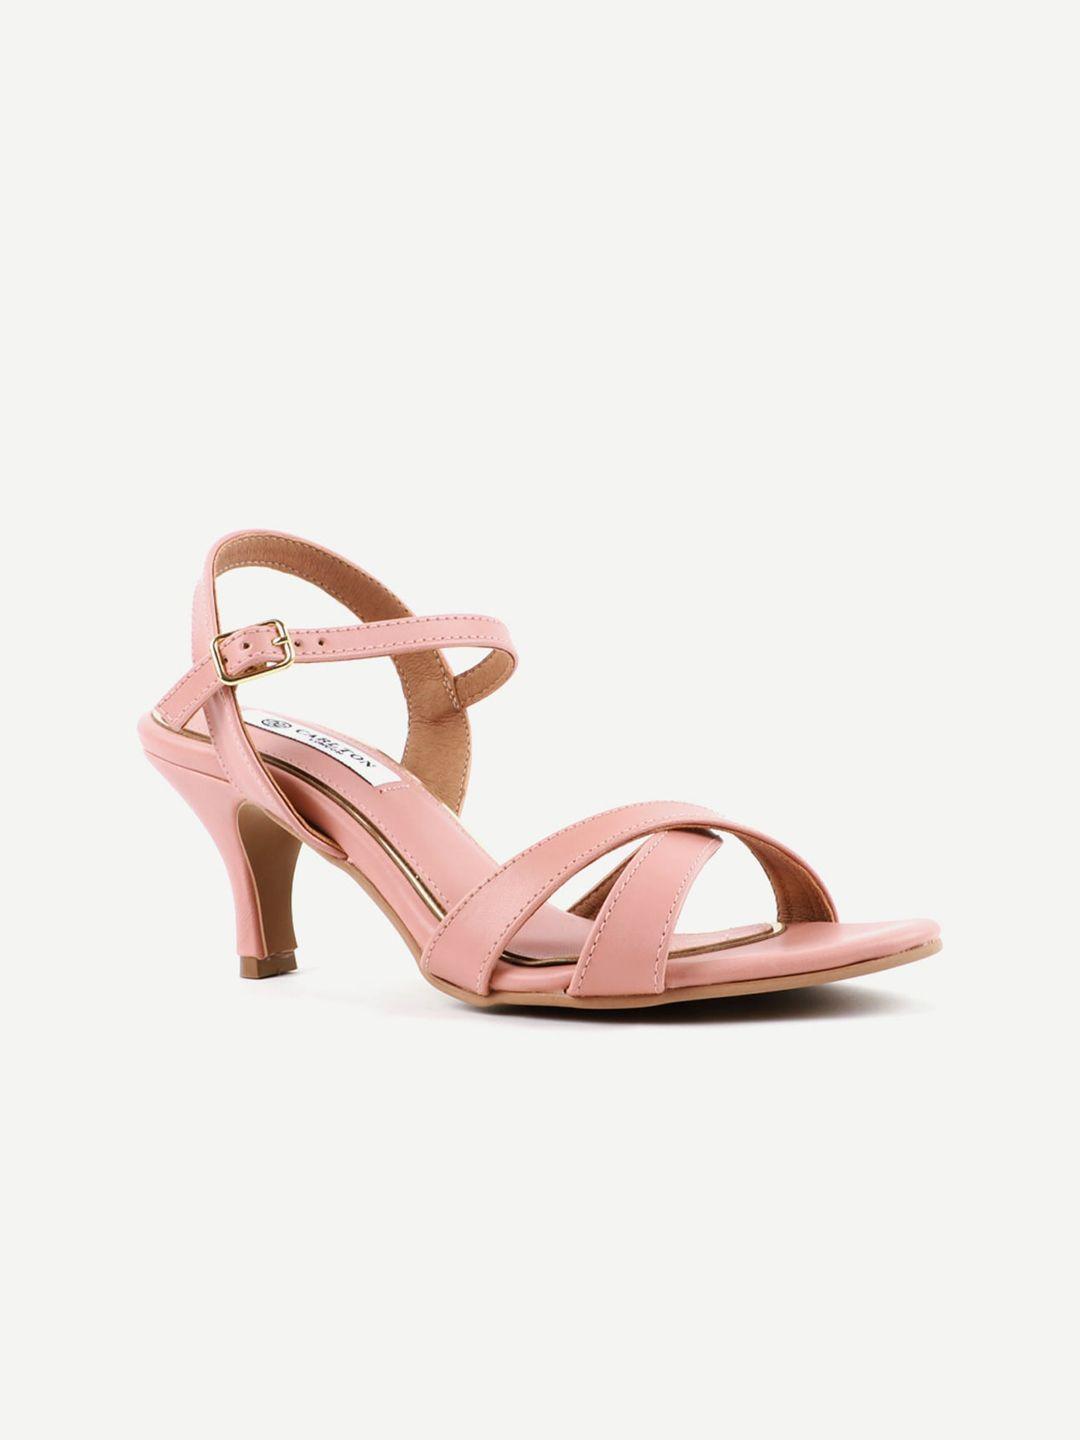 carlton london pink sandals